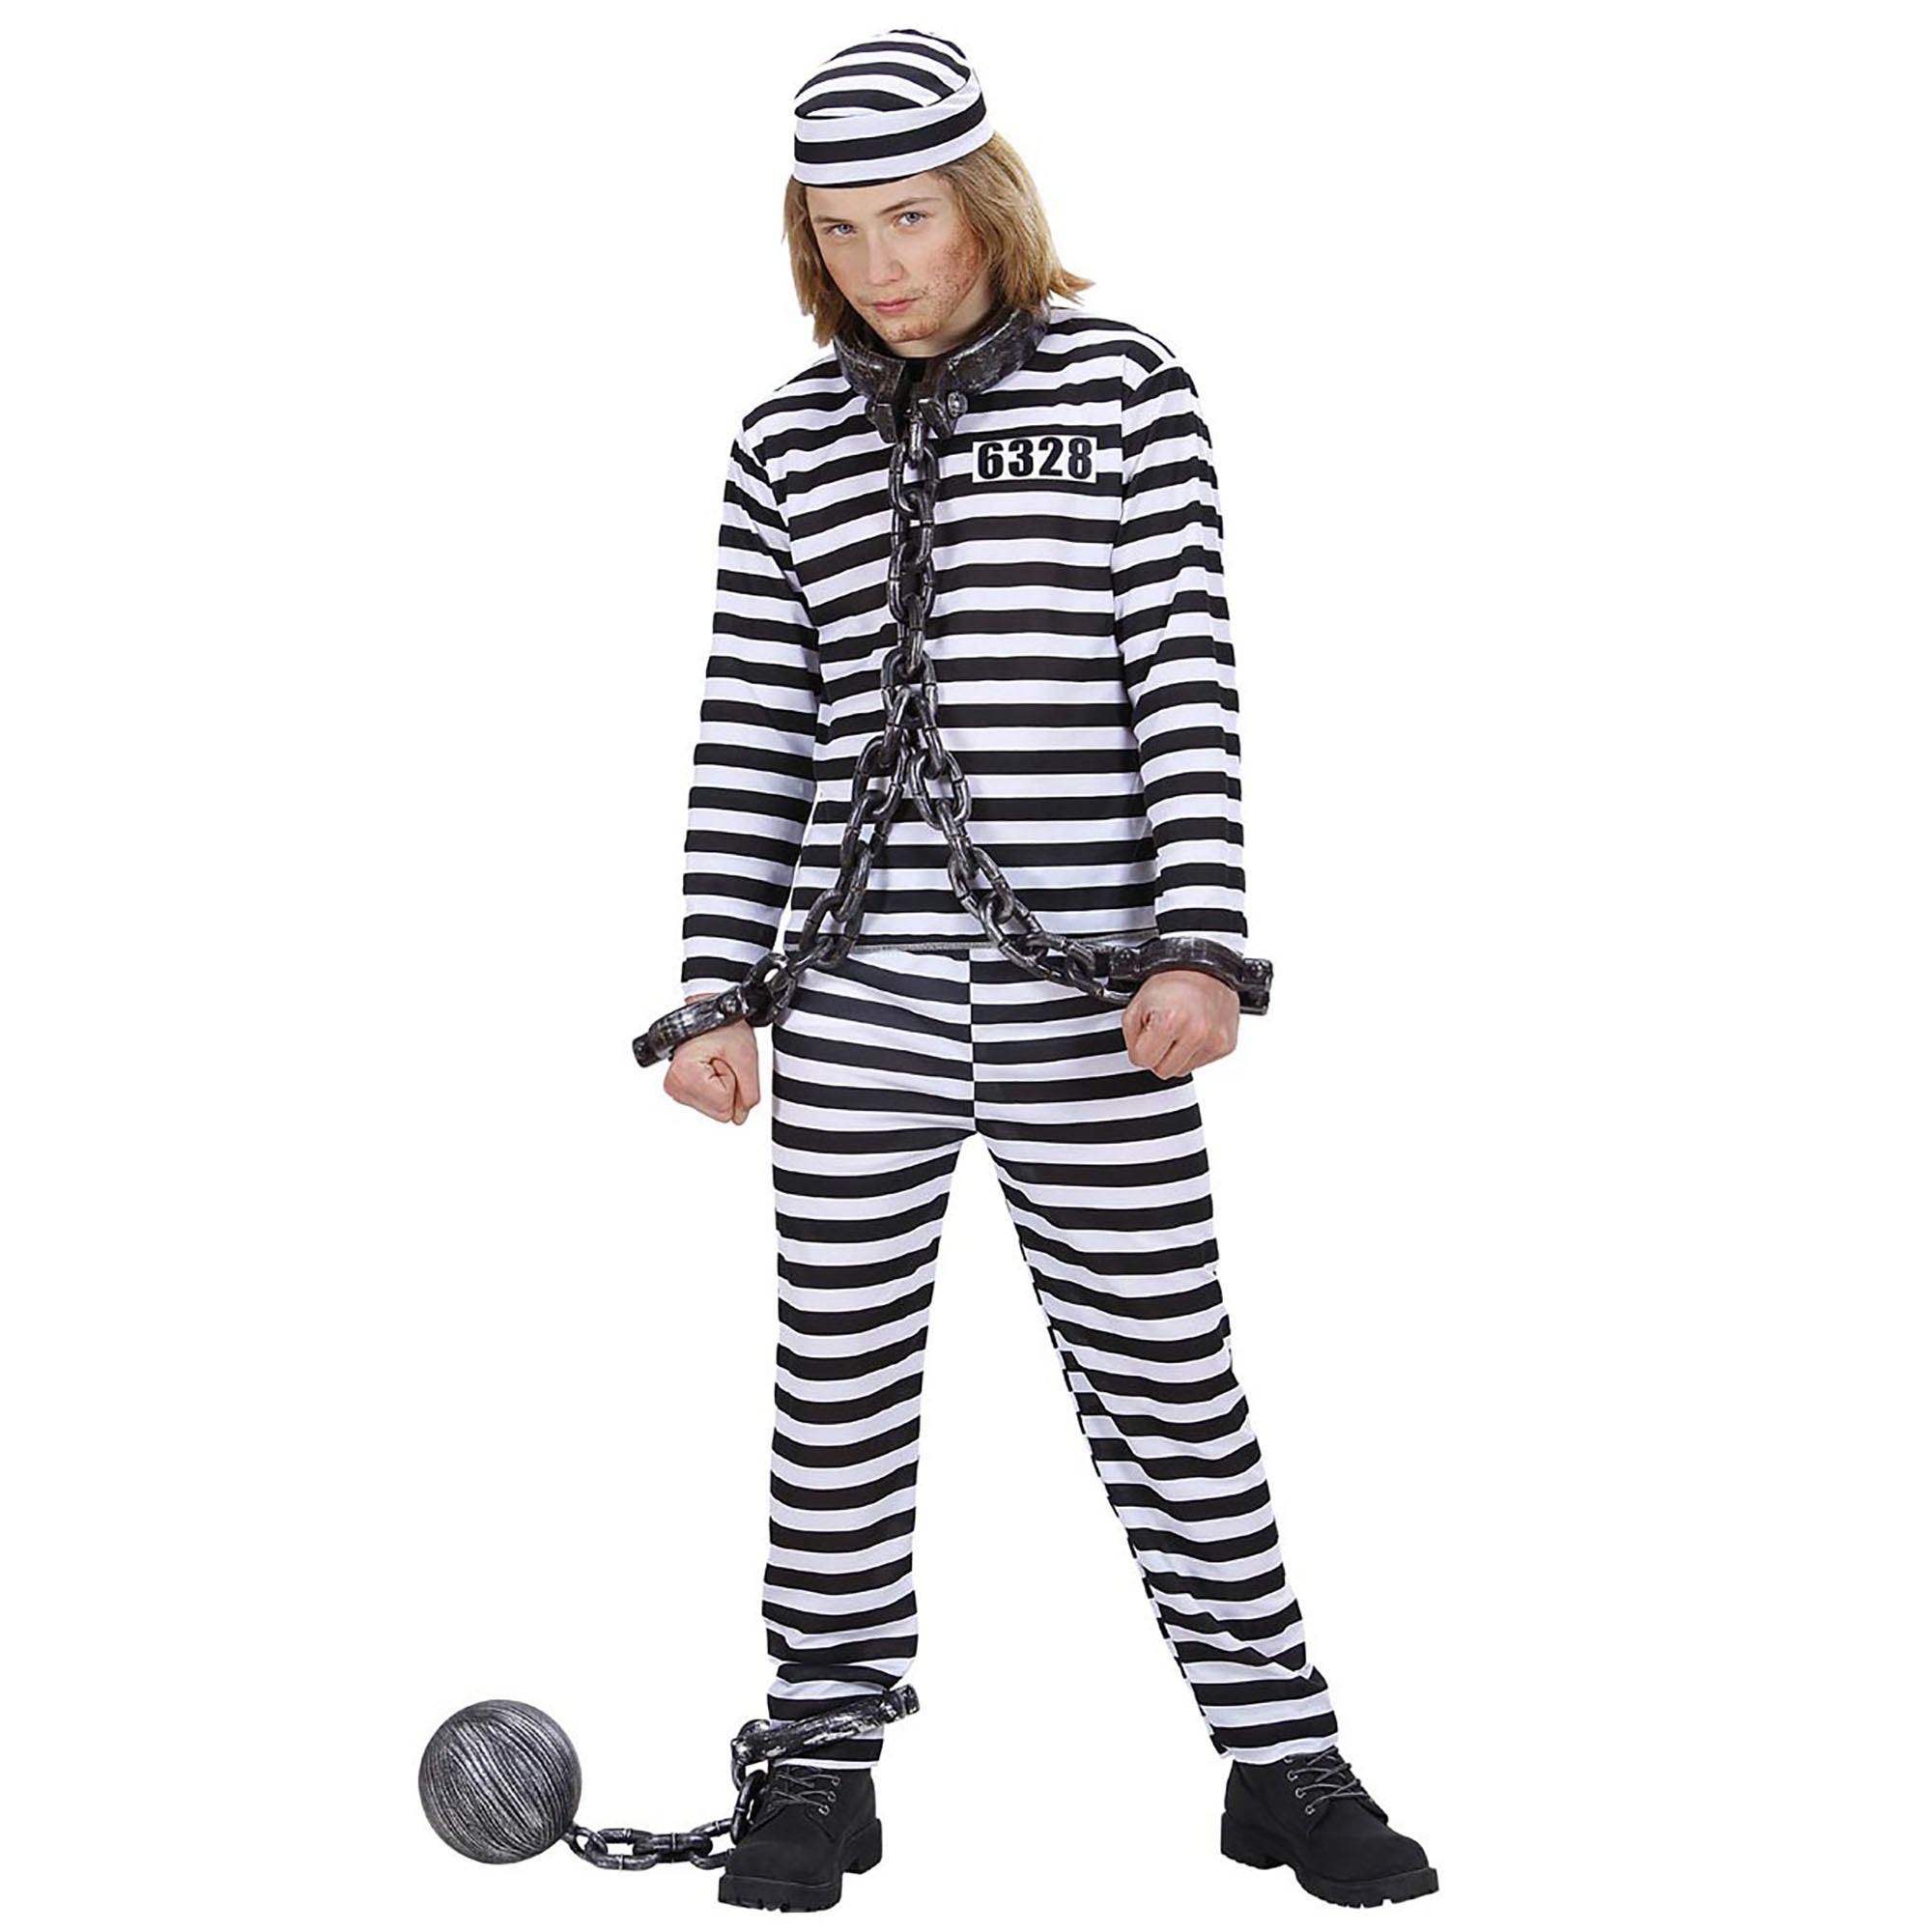 Widmann - Boef Kostuum - Boef Kind Zwart-Wit Gevangenisboef Kostuum Jongen - - Maat 128 - Carnavalskleding - Verkleedkleding